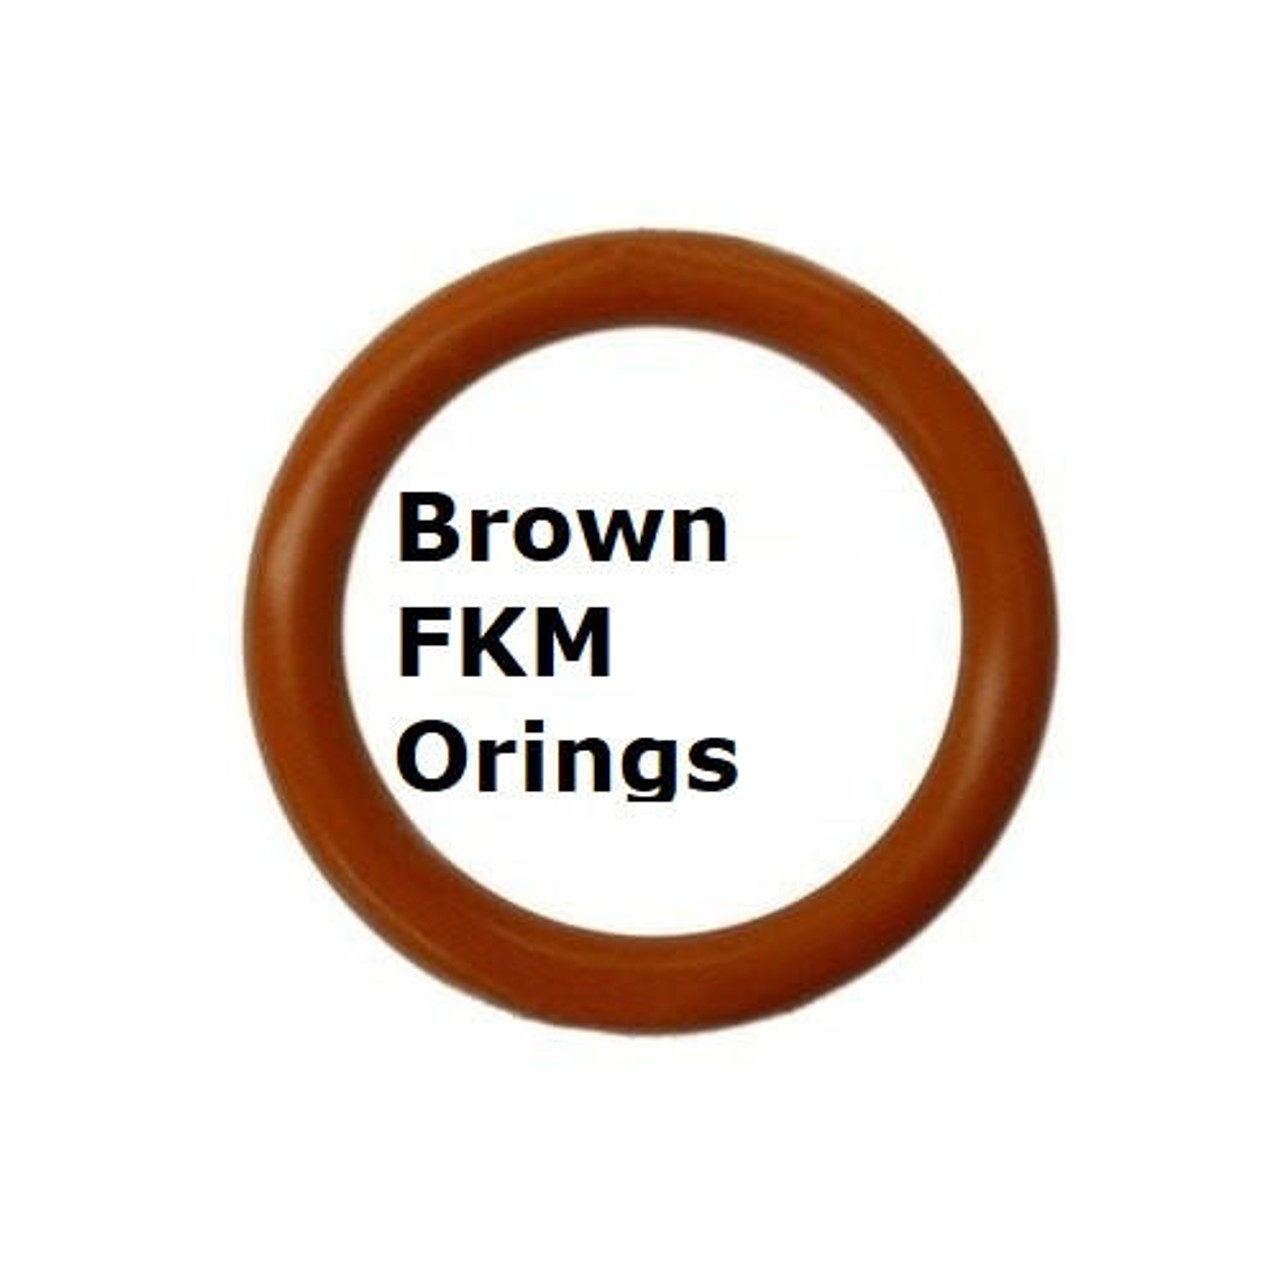 FKM Heat Resistant Brown O-rings  Size 120   Minimum 5 pcs